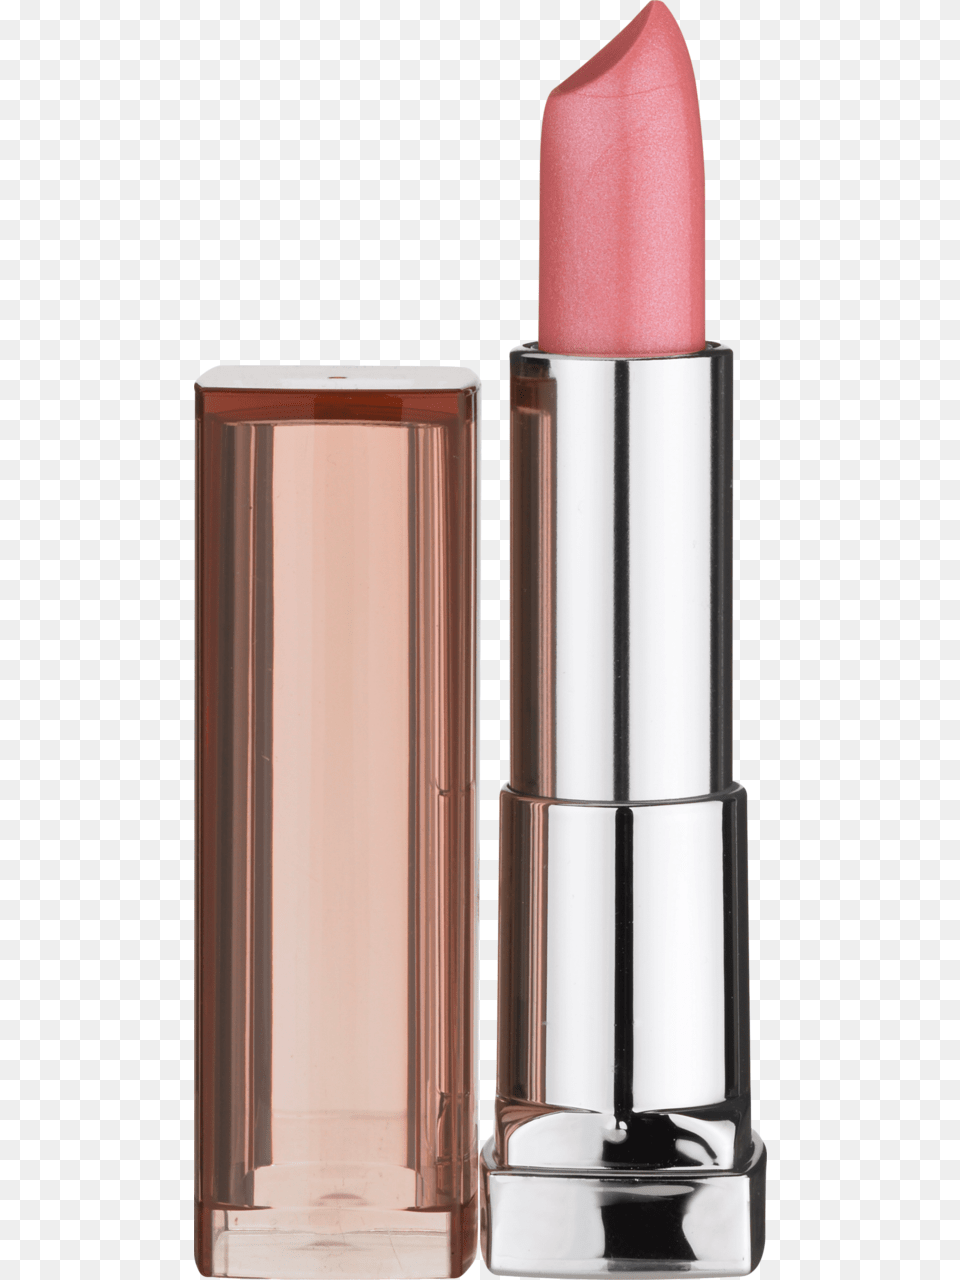 Lipstick, Cosmetics Png